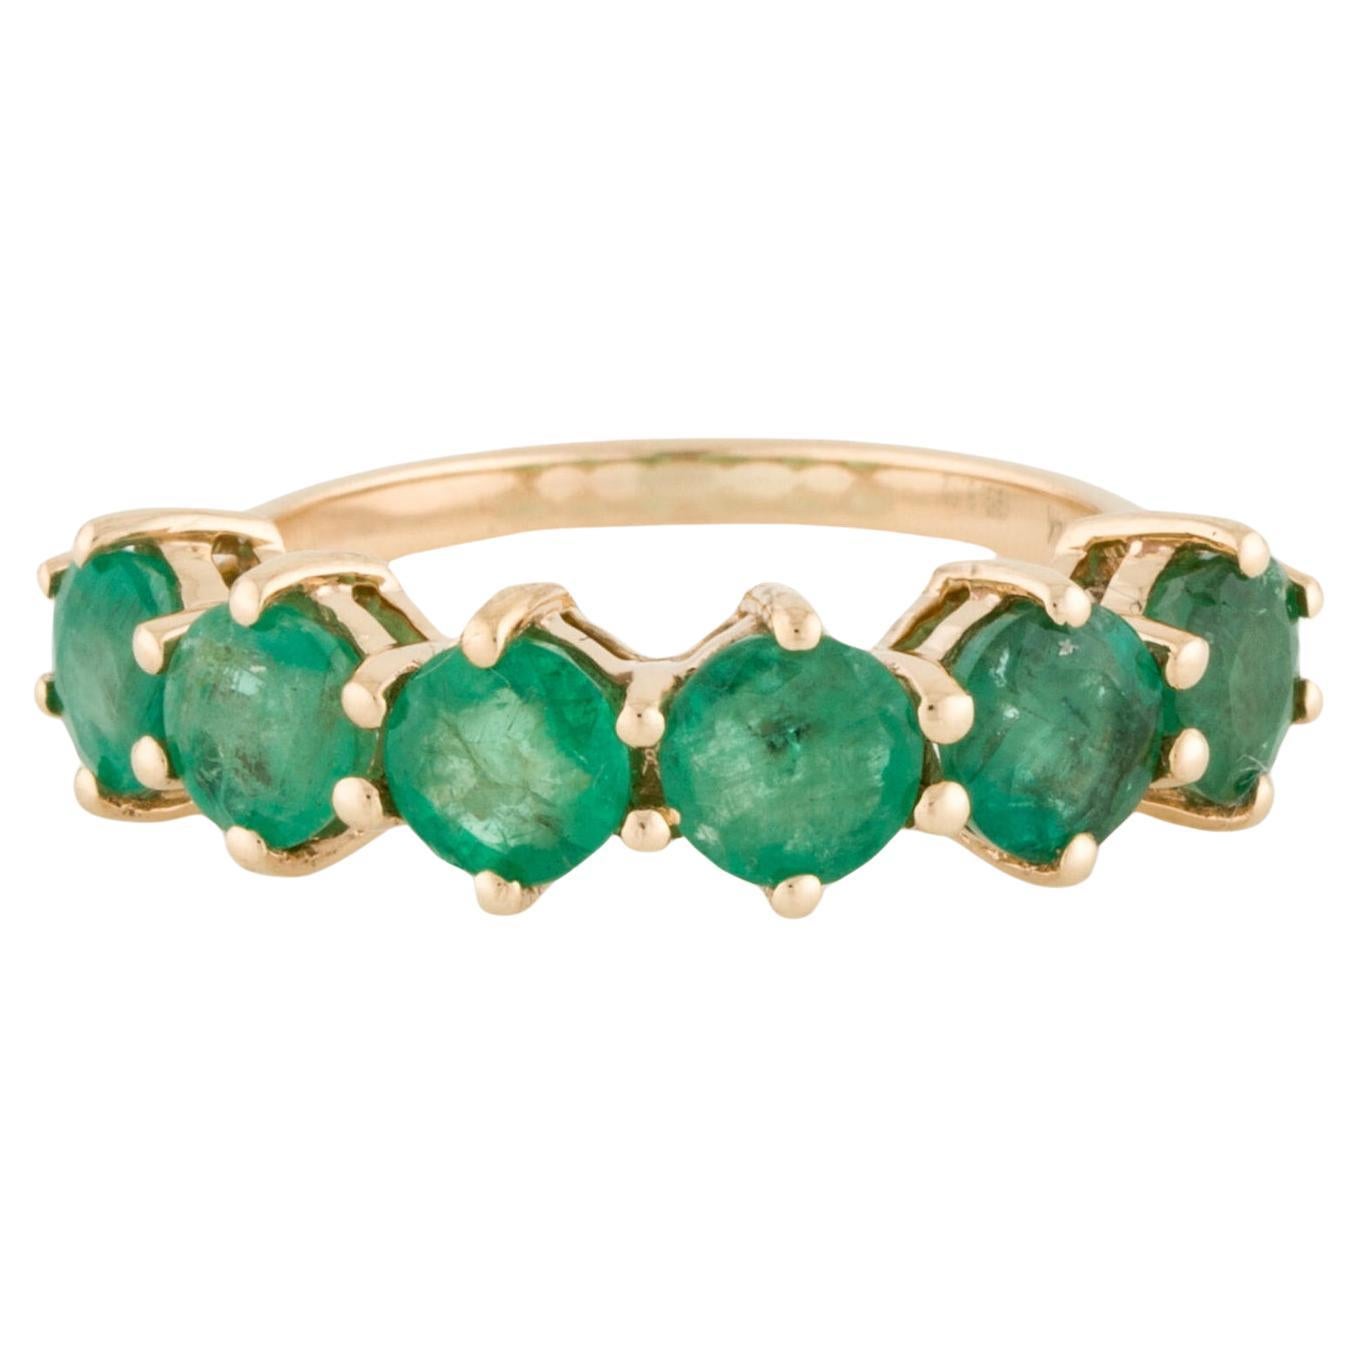 14K Emerald Band Ring 2.29ctw - Size 6.75 - Timeless Elegance, Luxurious Design